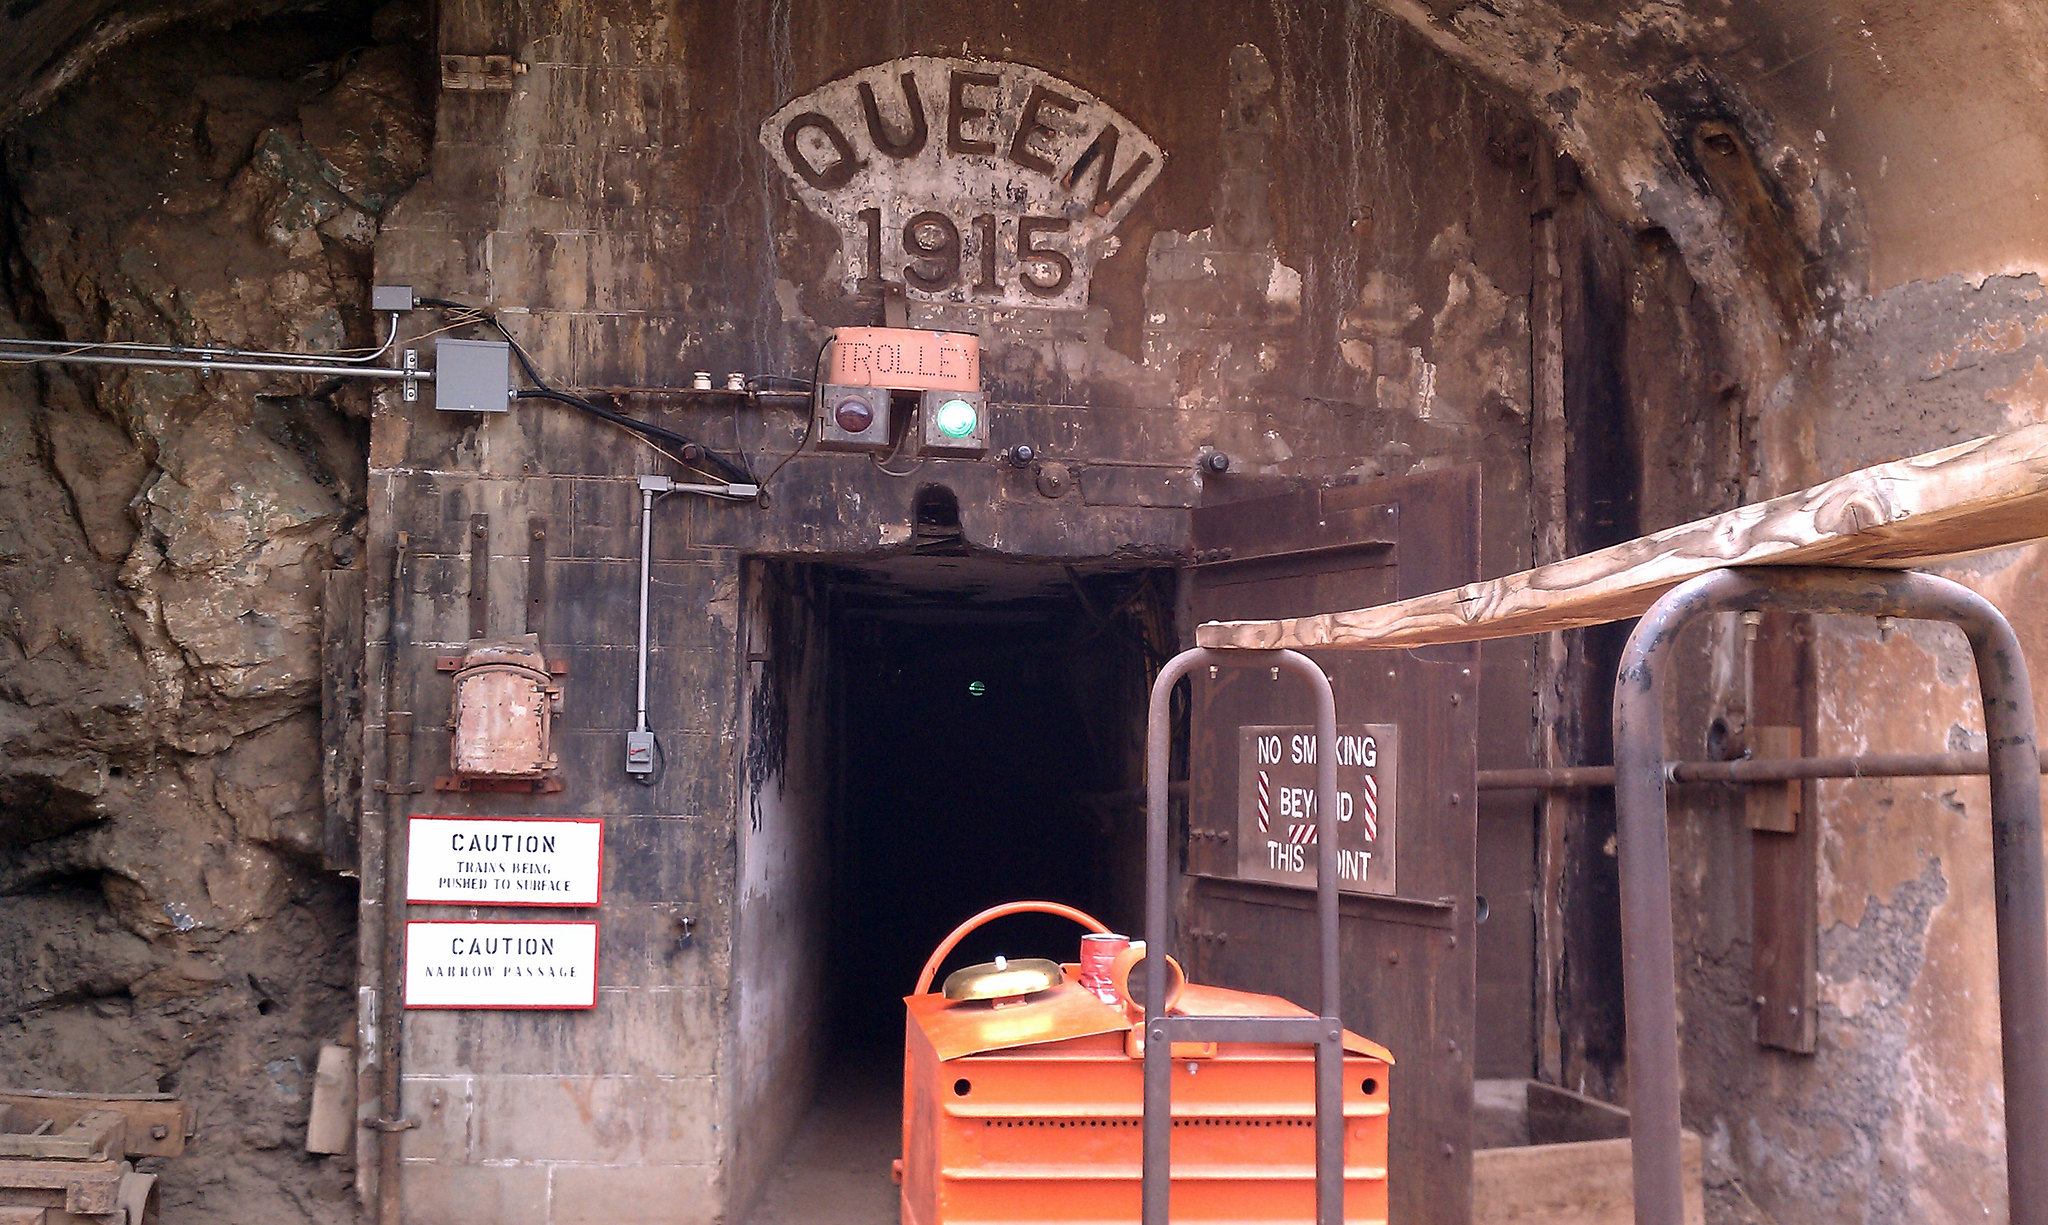 copper queen mine tour hours